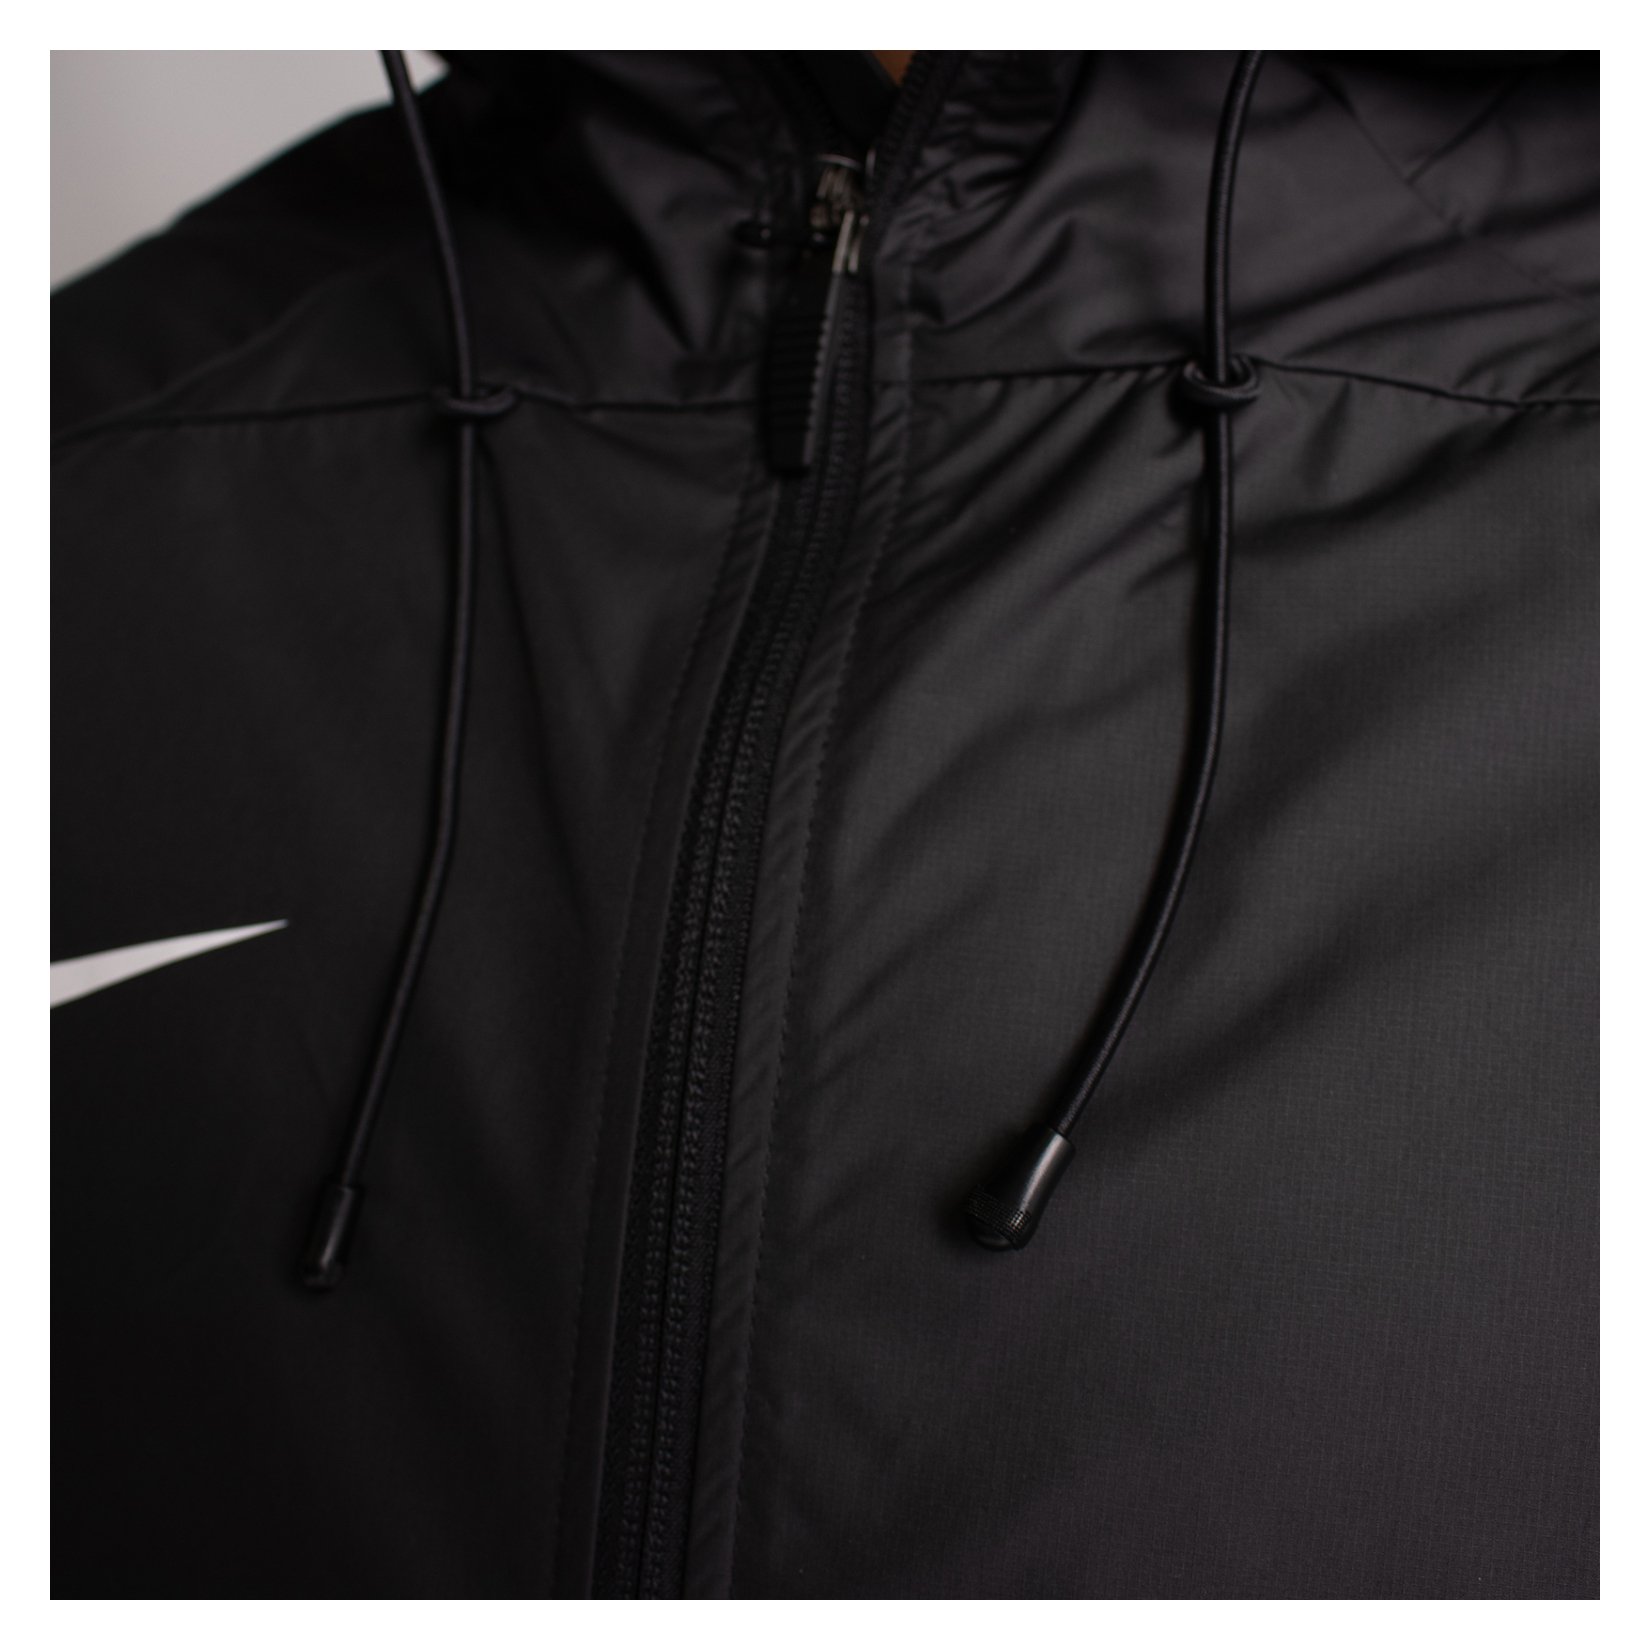 Nike Storm-FIT Academy Pro Rain Jacket - Kitlocker.com